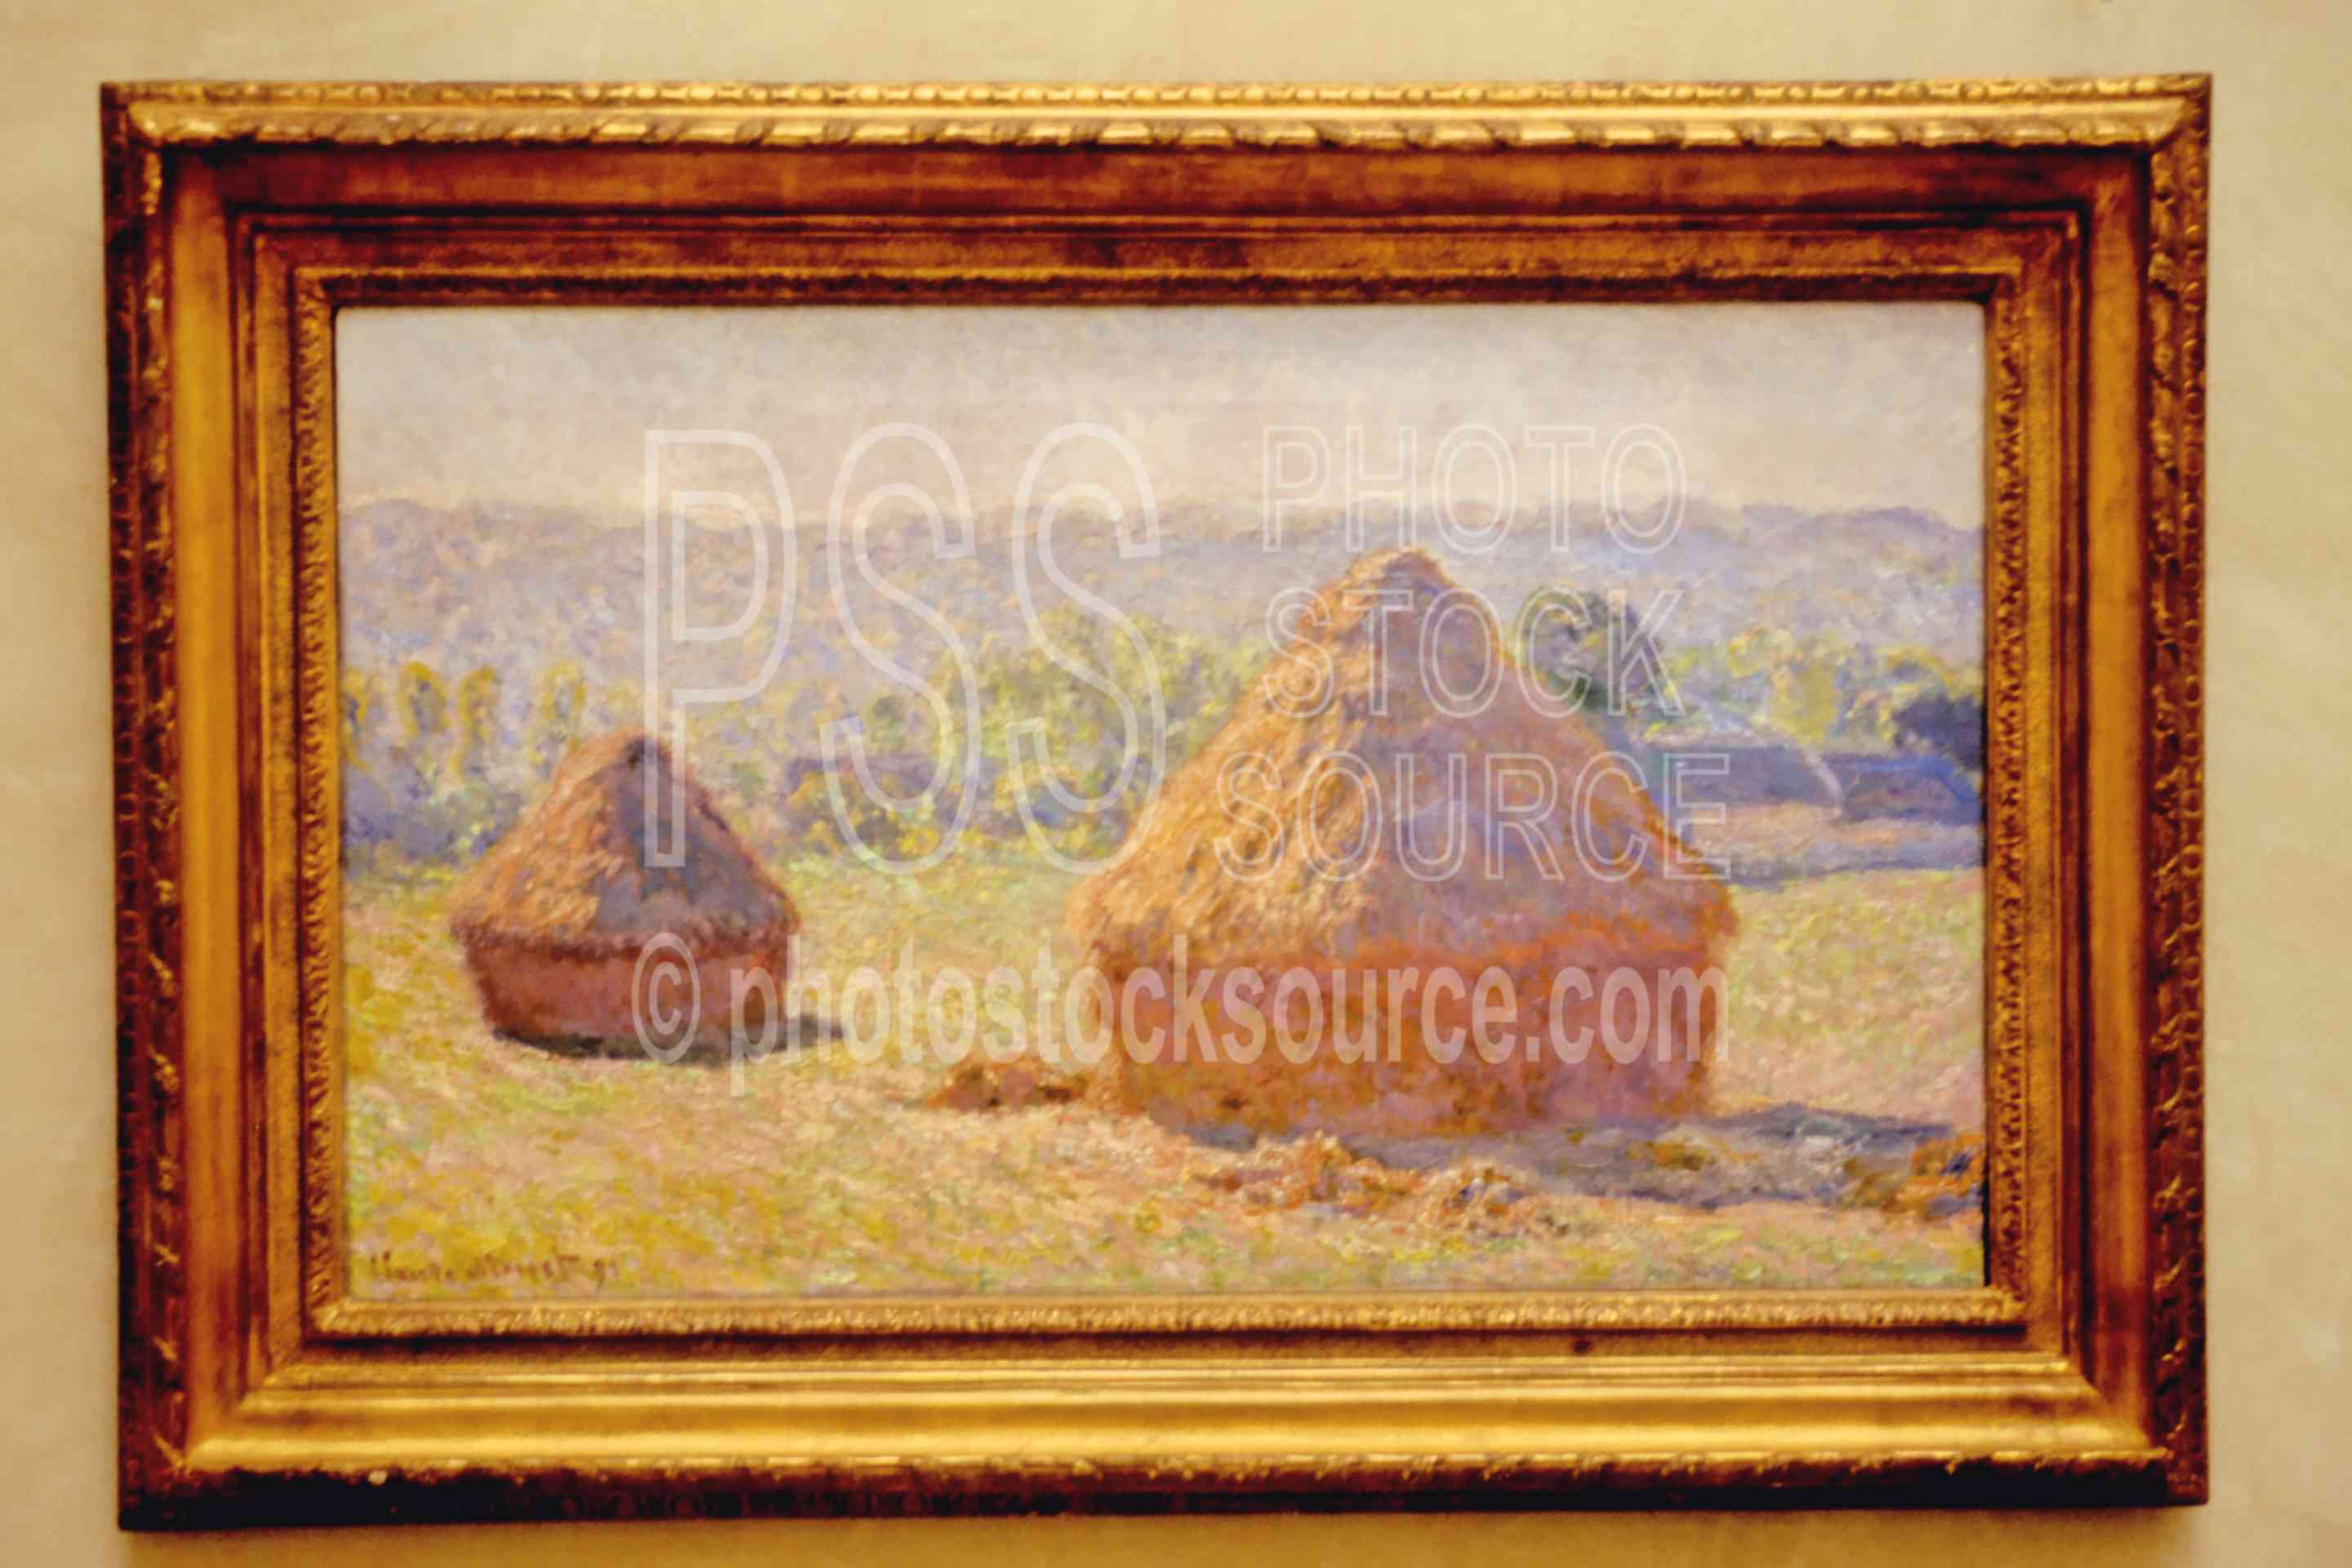 Monet - Haystacks,europe,haystacks,monet,musee dorsay,museum,arts,paintings,france museums